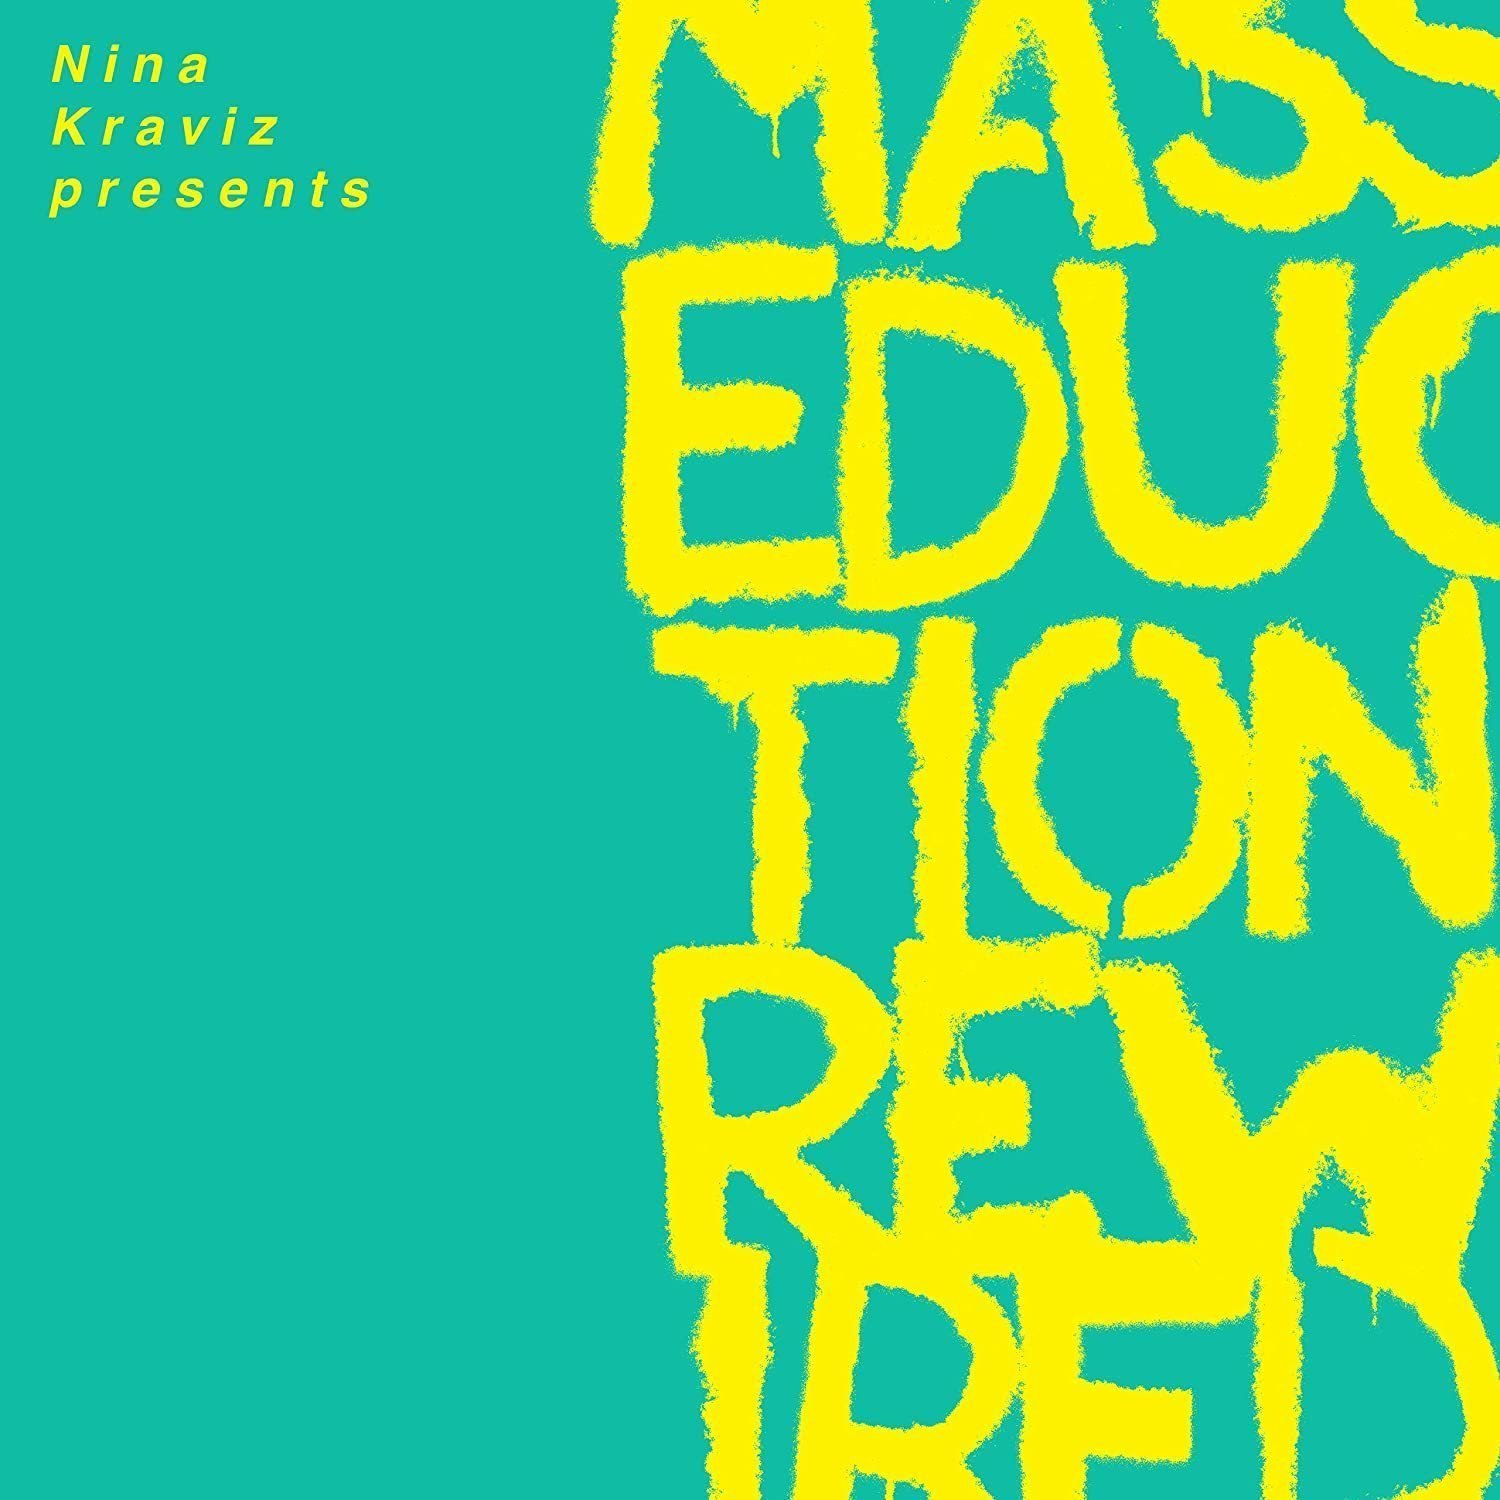 LP St. Vincent - Nina Kraviz Presents Masseduction Rewired (LP)